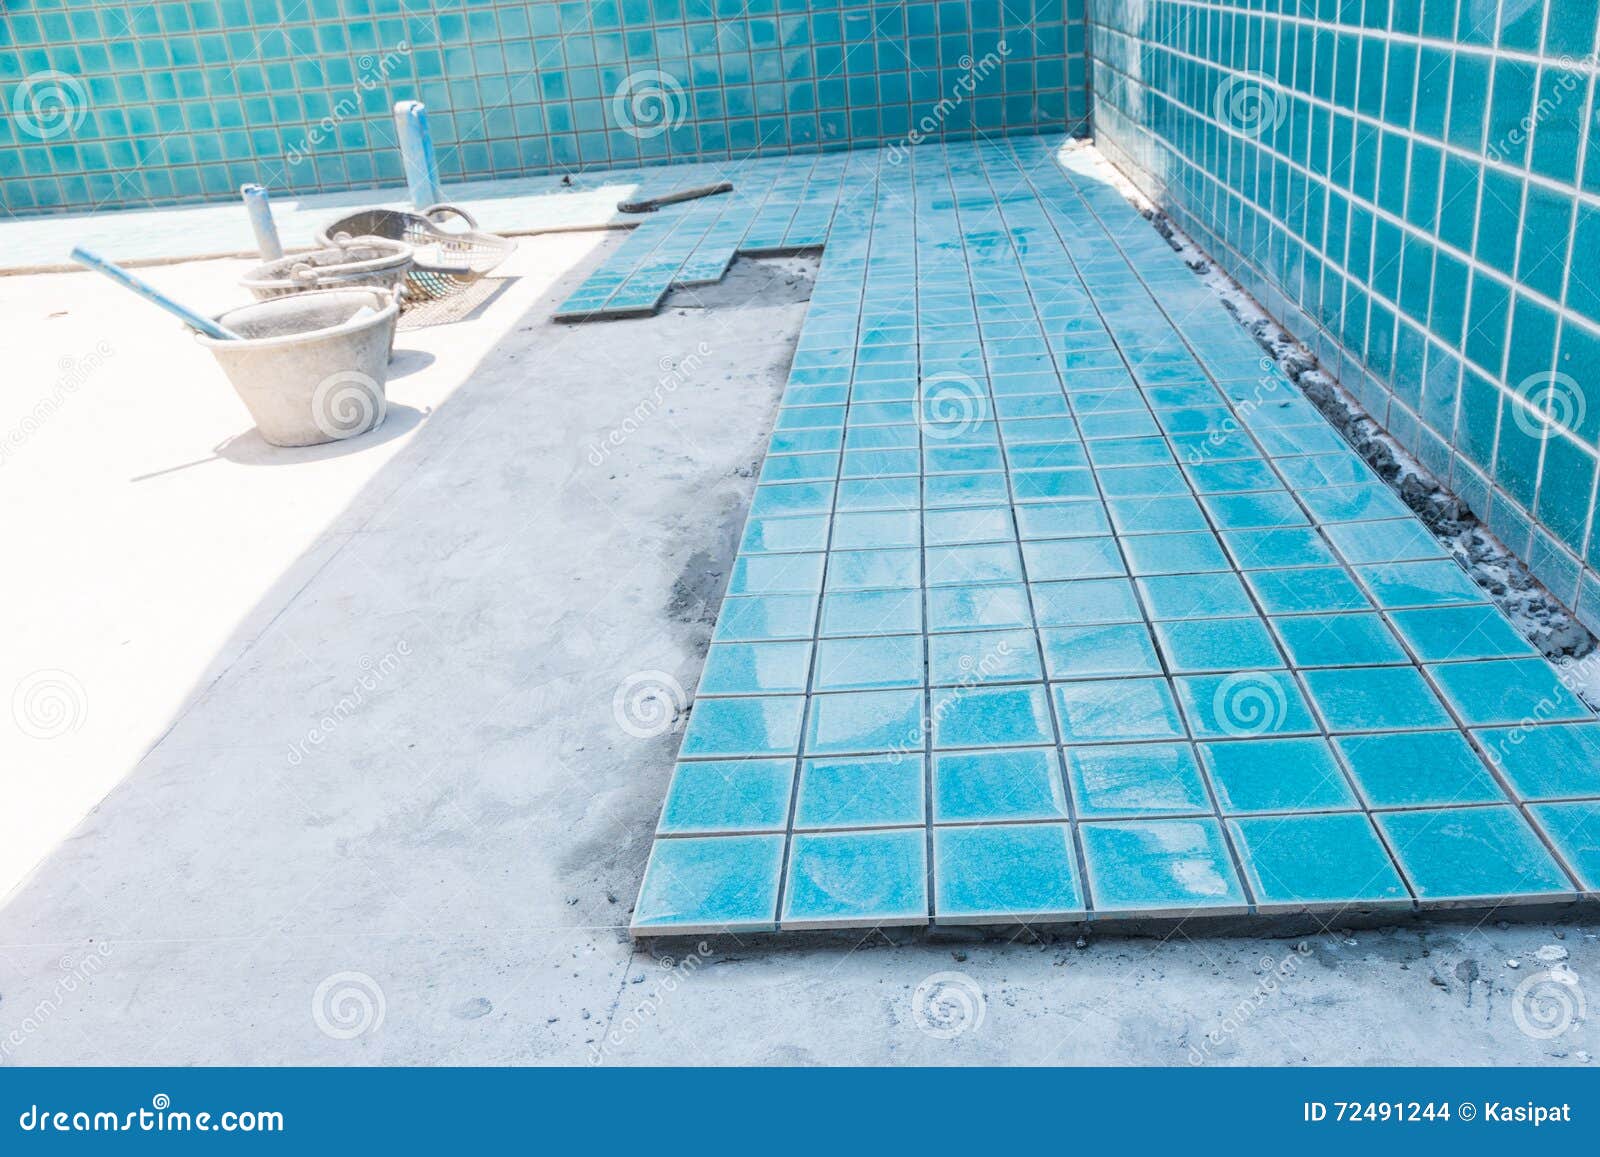 tile builder swimming pool